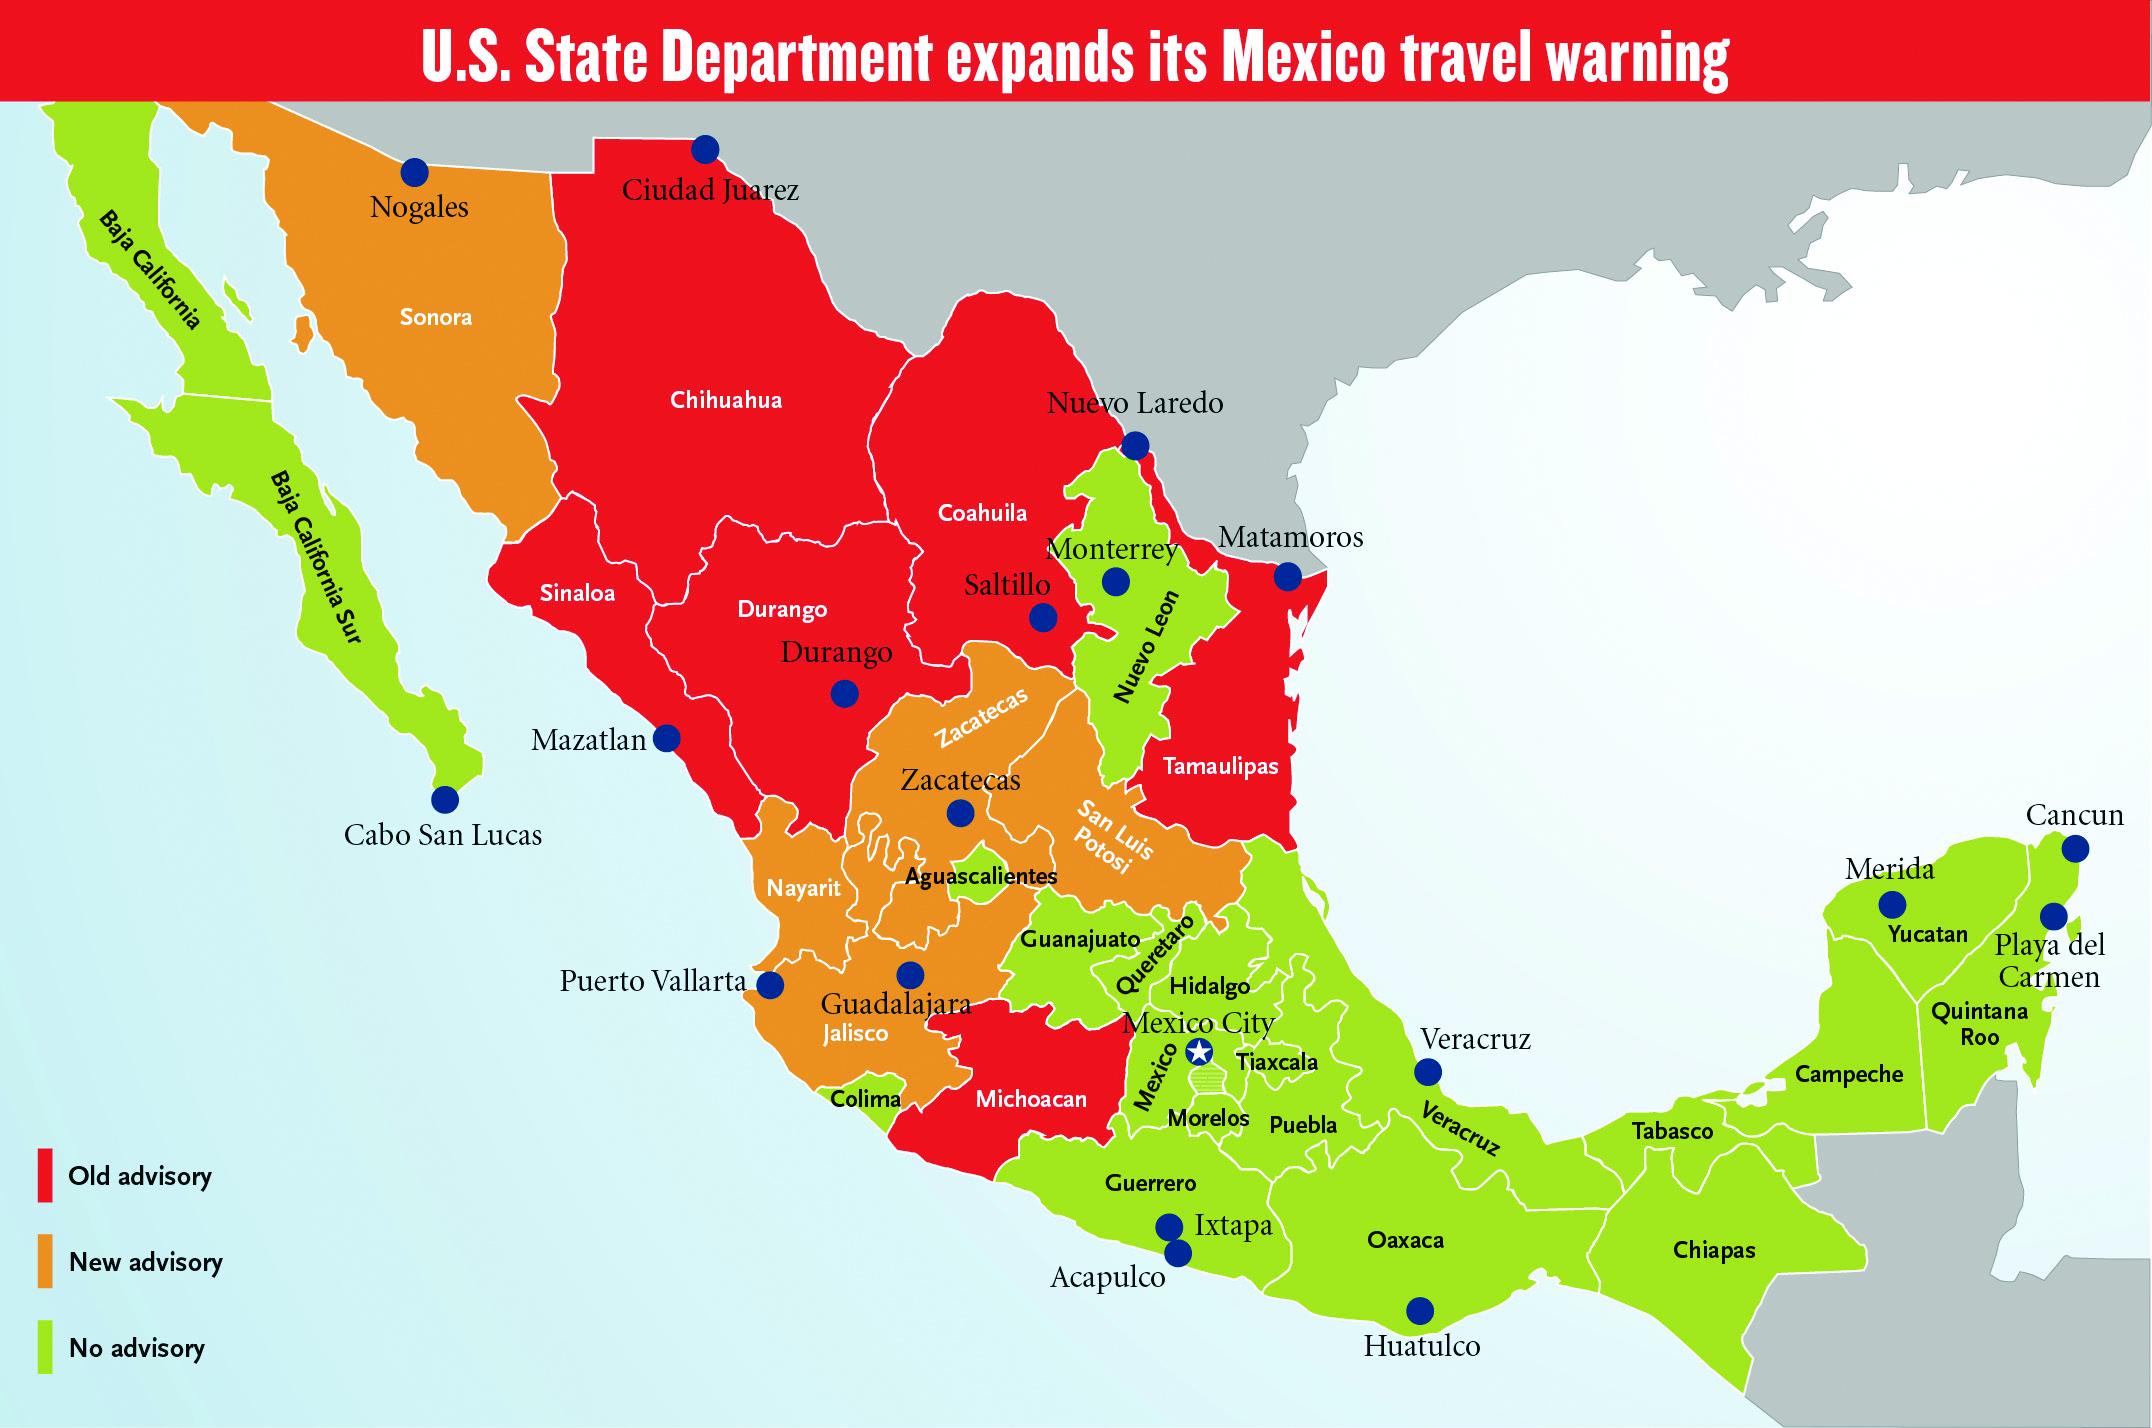 Mexico travel warning map - Mexico travel advisory map (Central America